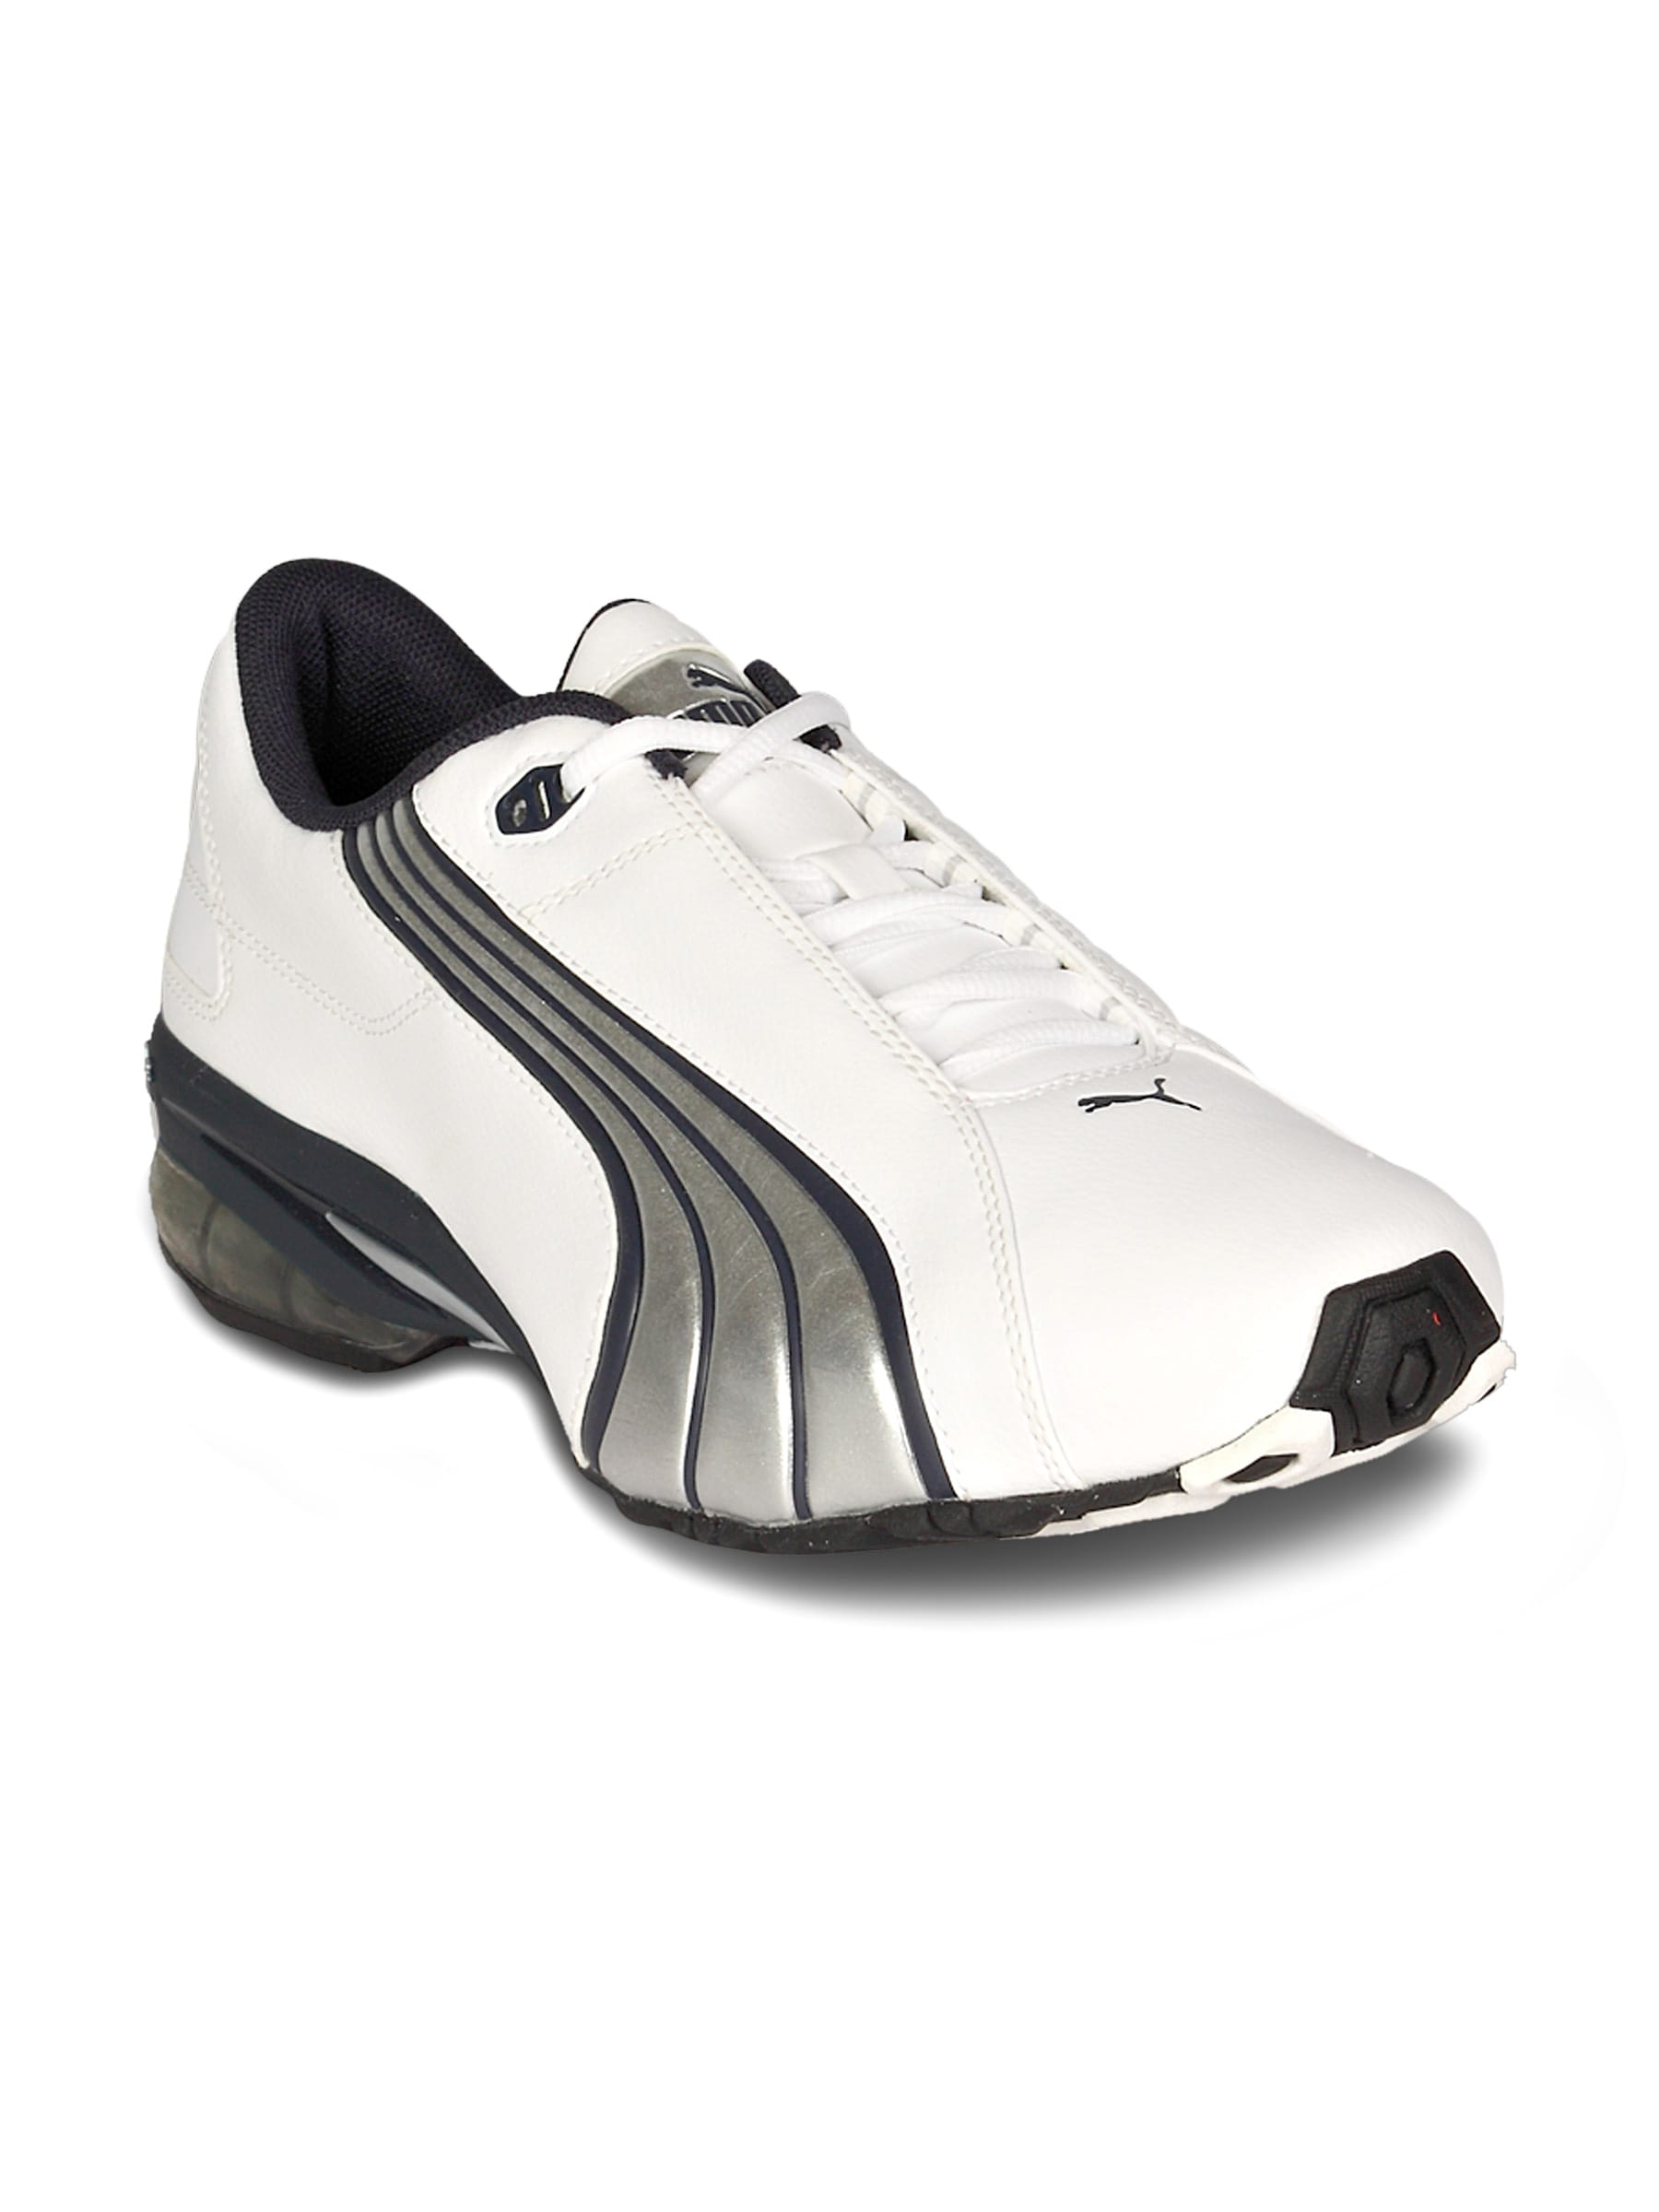 Puma Men's Jago White Silver Navy Shoe